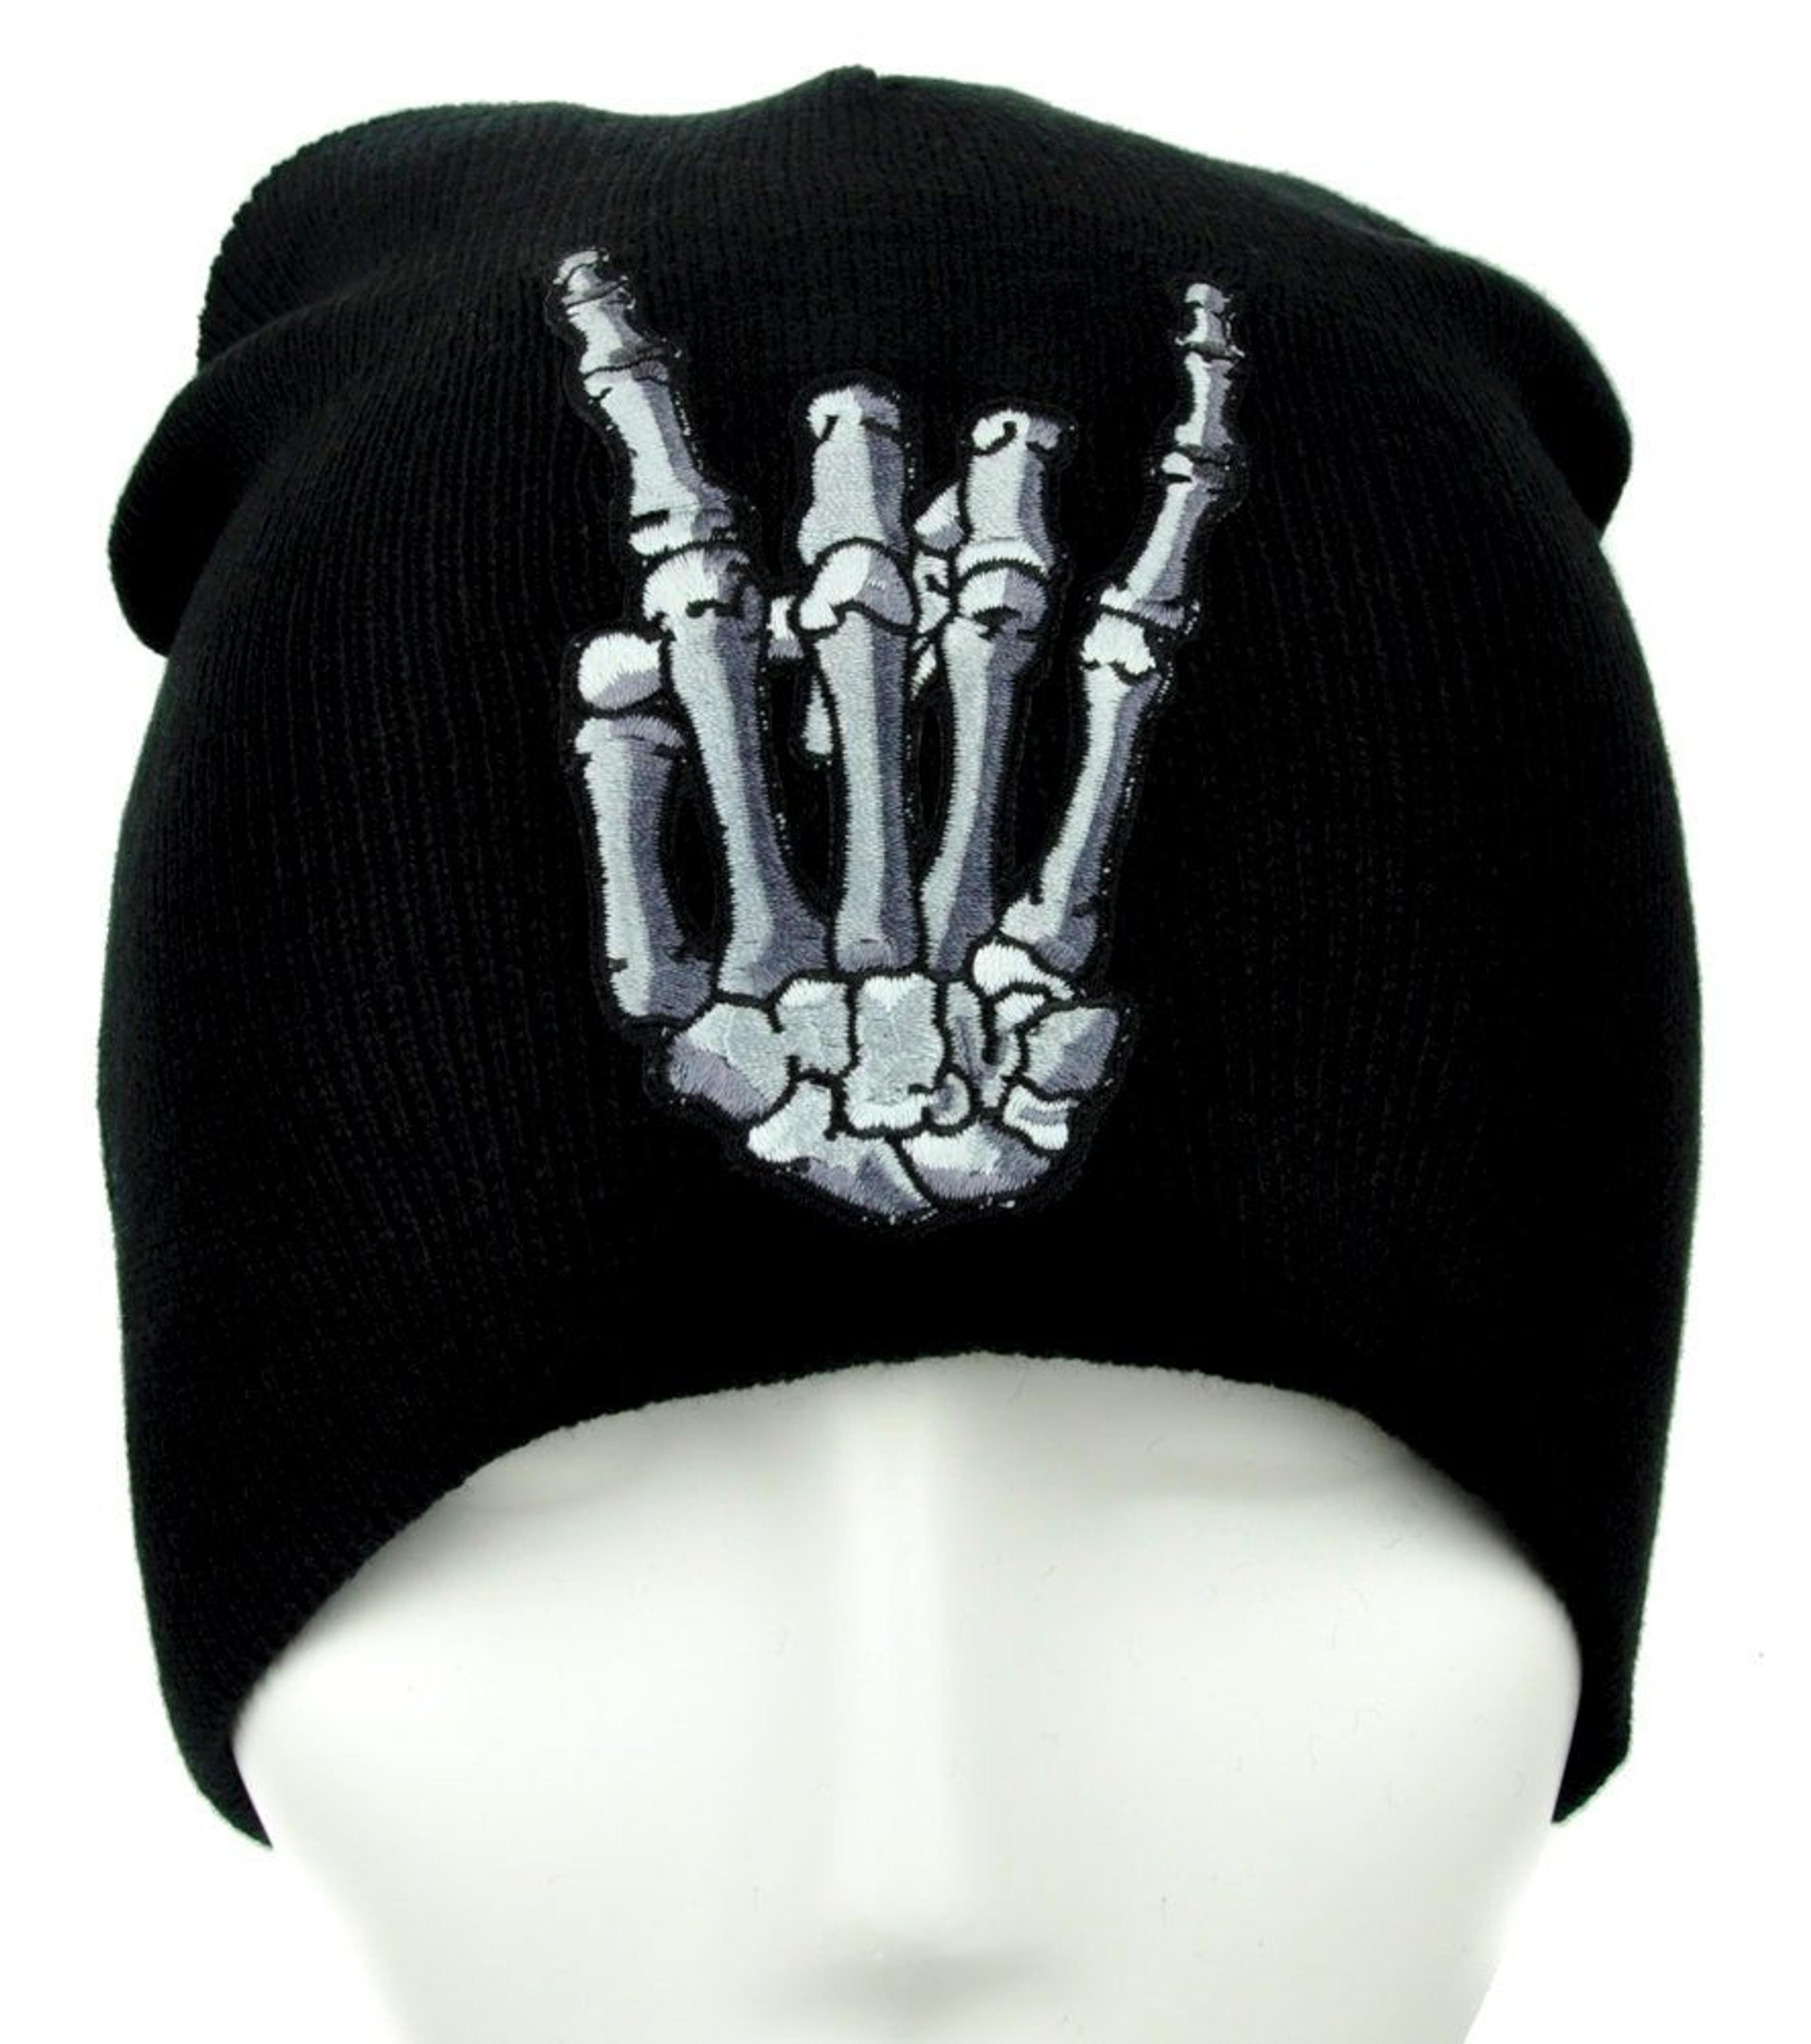 Skeleton Hand Horns Up Black & White Beanie Knit Cap Hat Punk Emo Grunge Metal